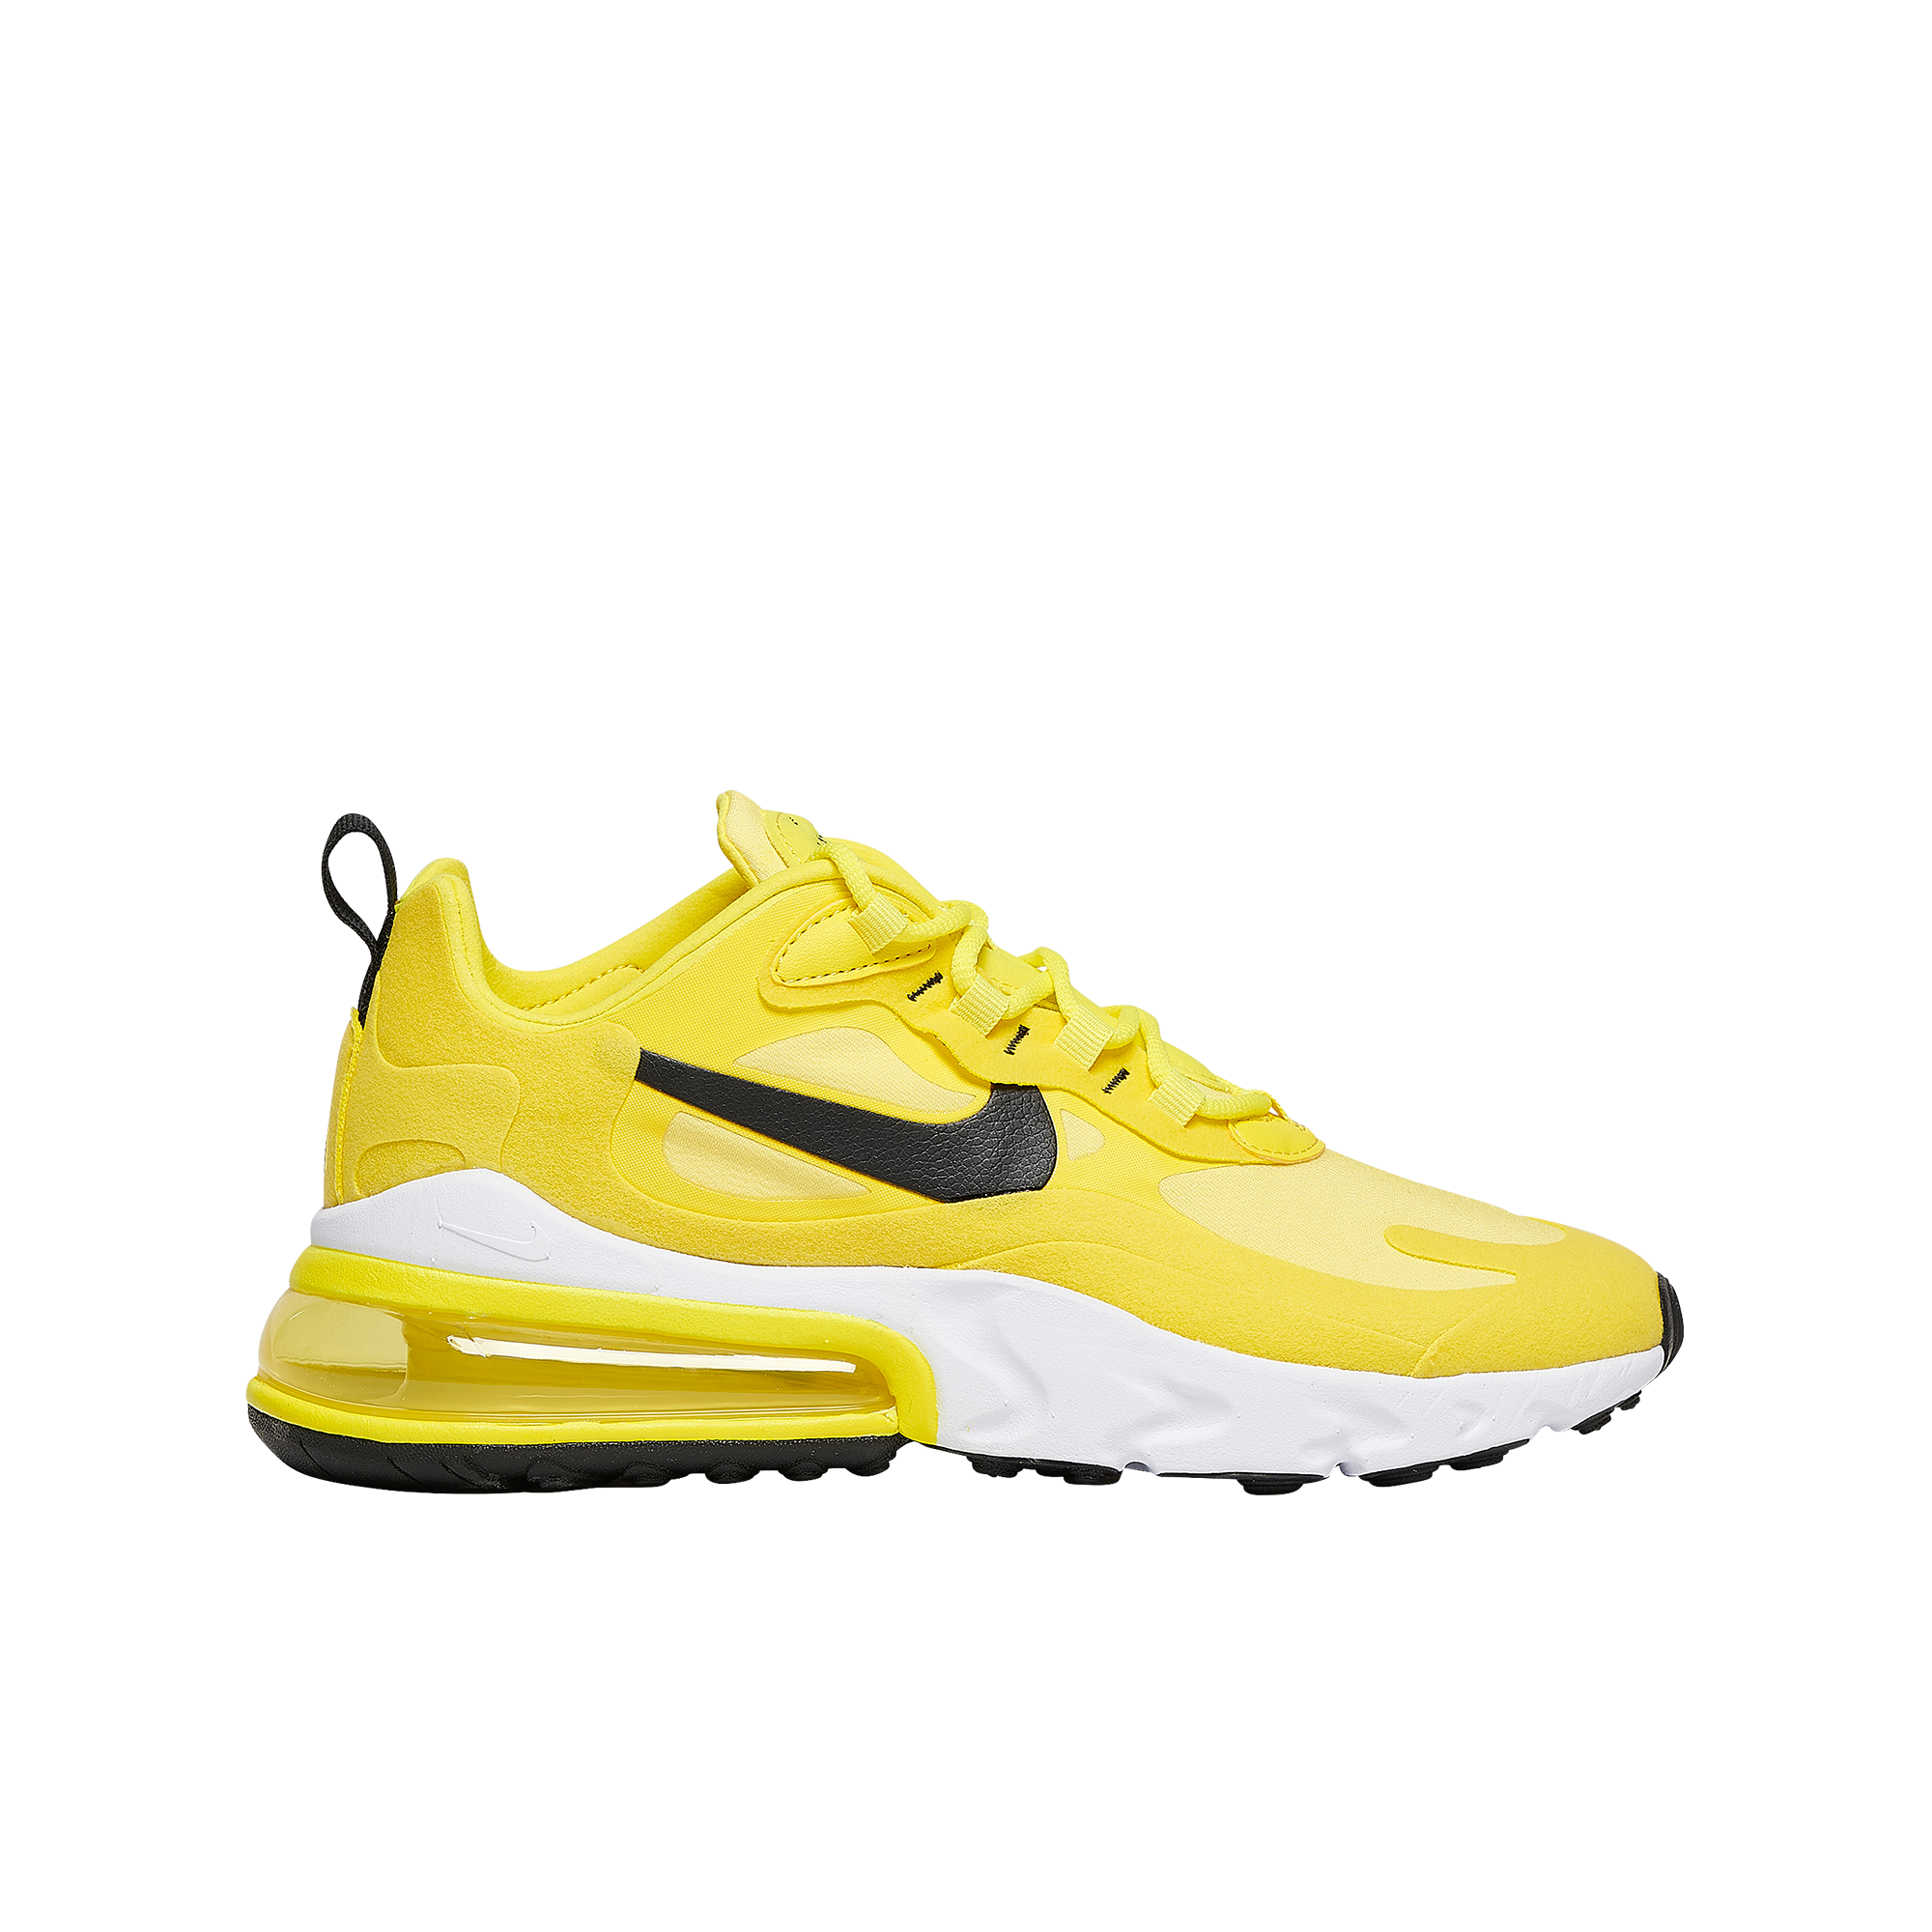 nike air max shoes yellow